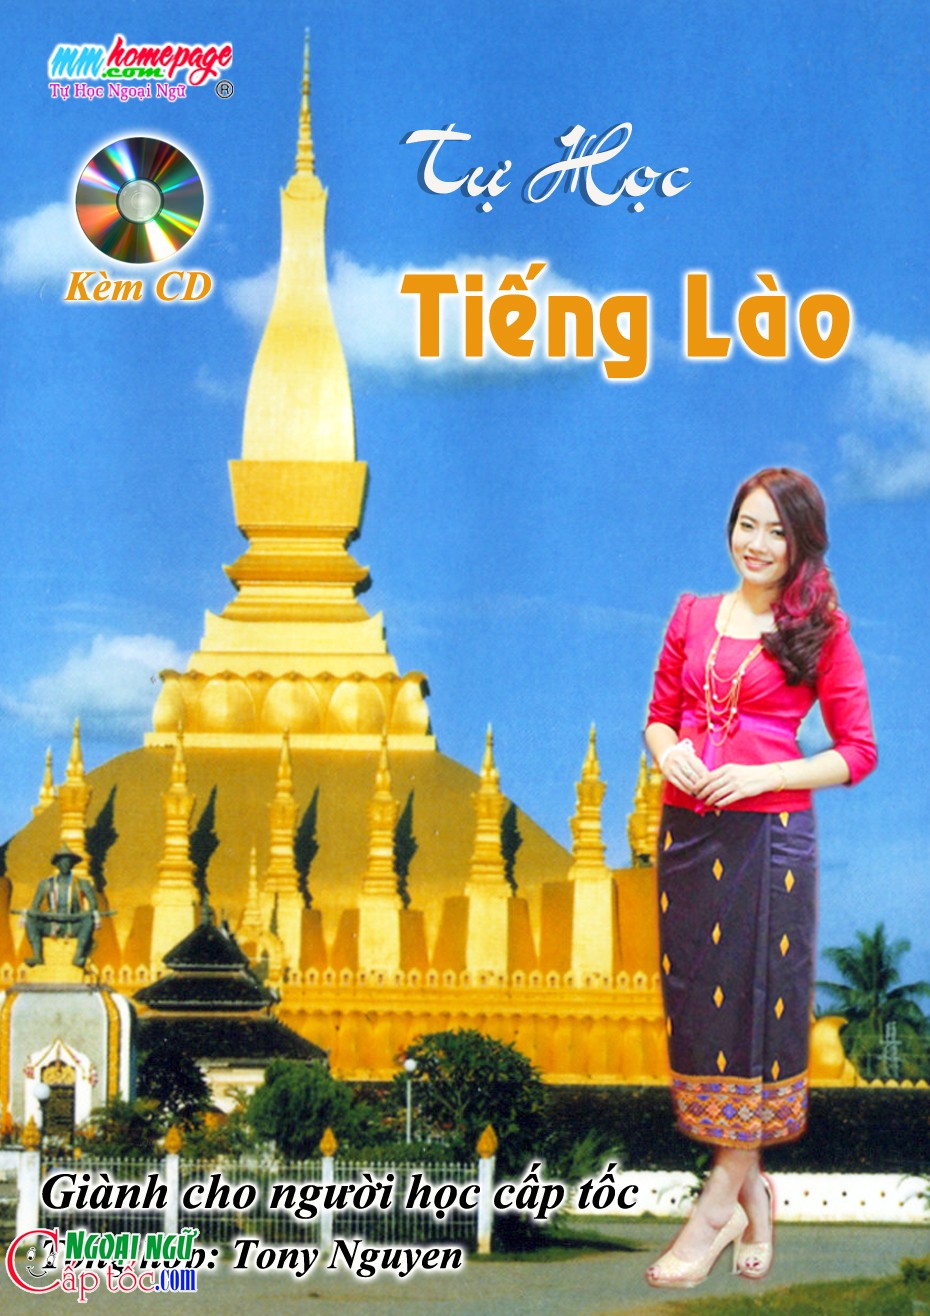 Trang Bia Tieng Lao new copy